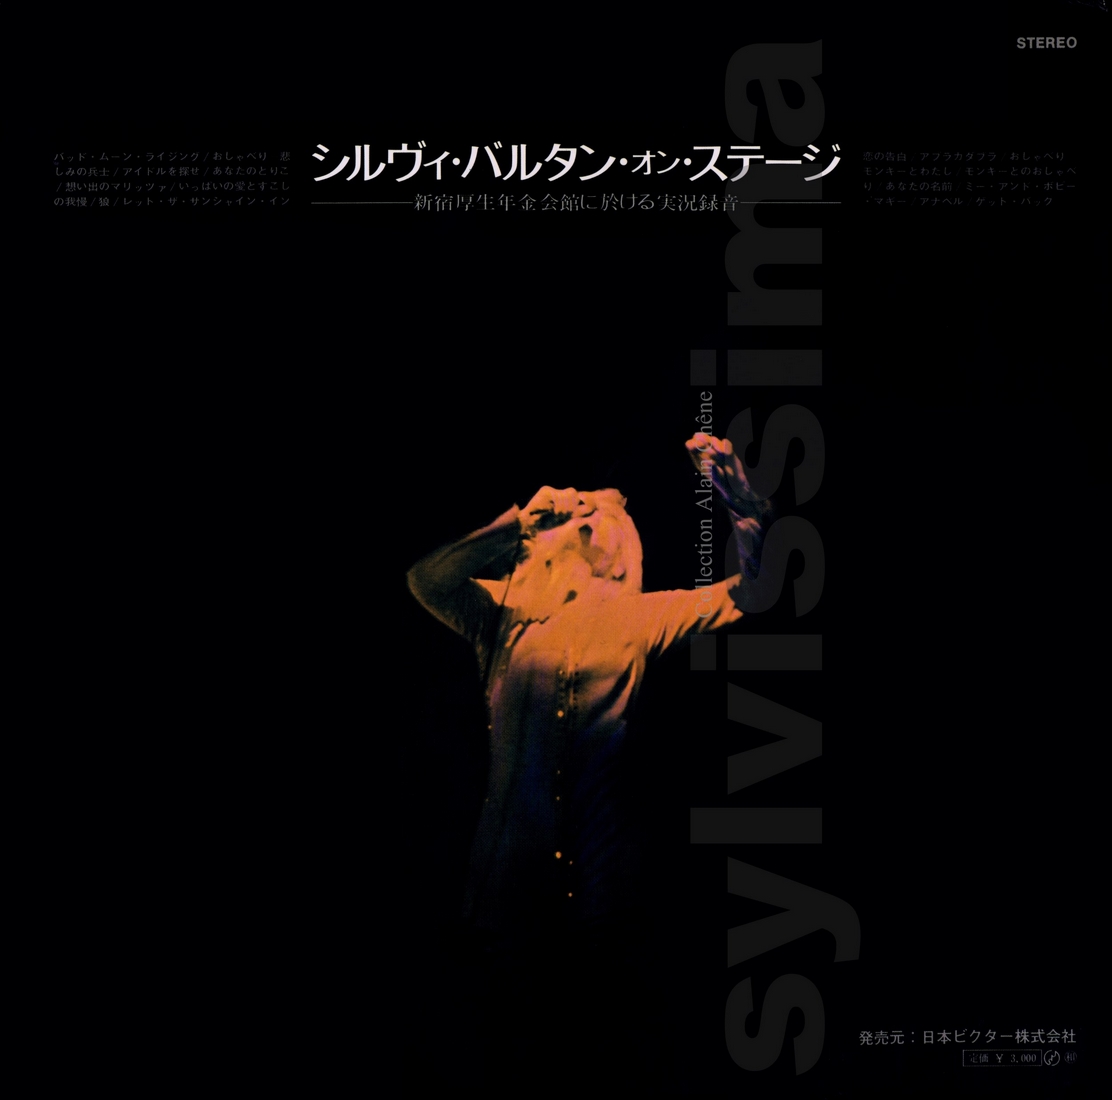 Sylvie Vartan Double LP live Japon "Sylvie à Tokyo" SRA-9276~77 Verso 